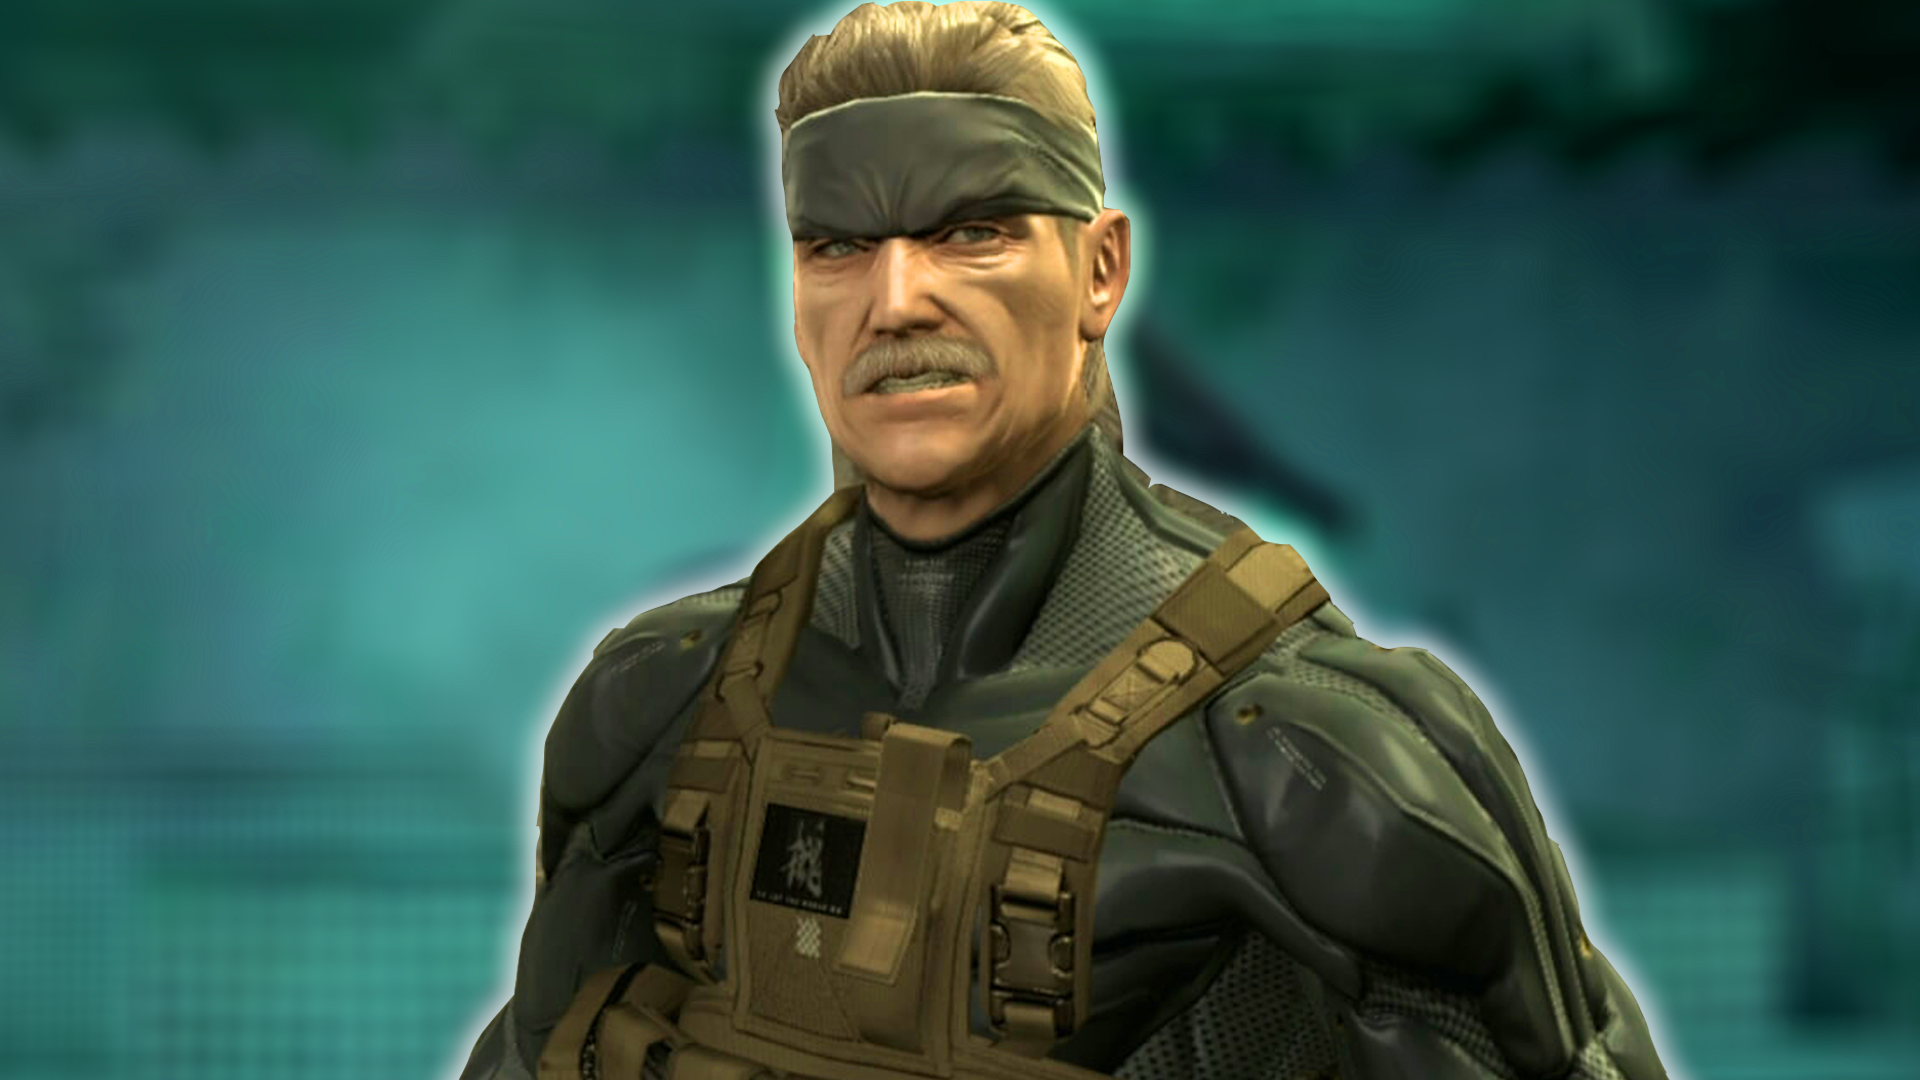 Metal Gear Solid Delta: Snake Eater ganha vídeo com gameplay